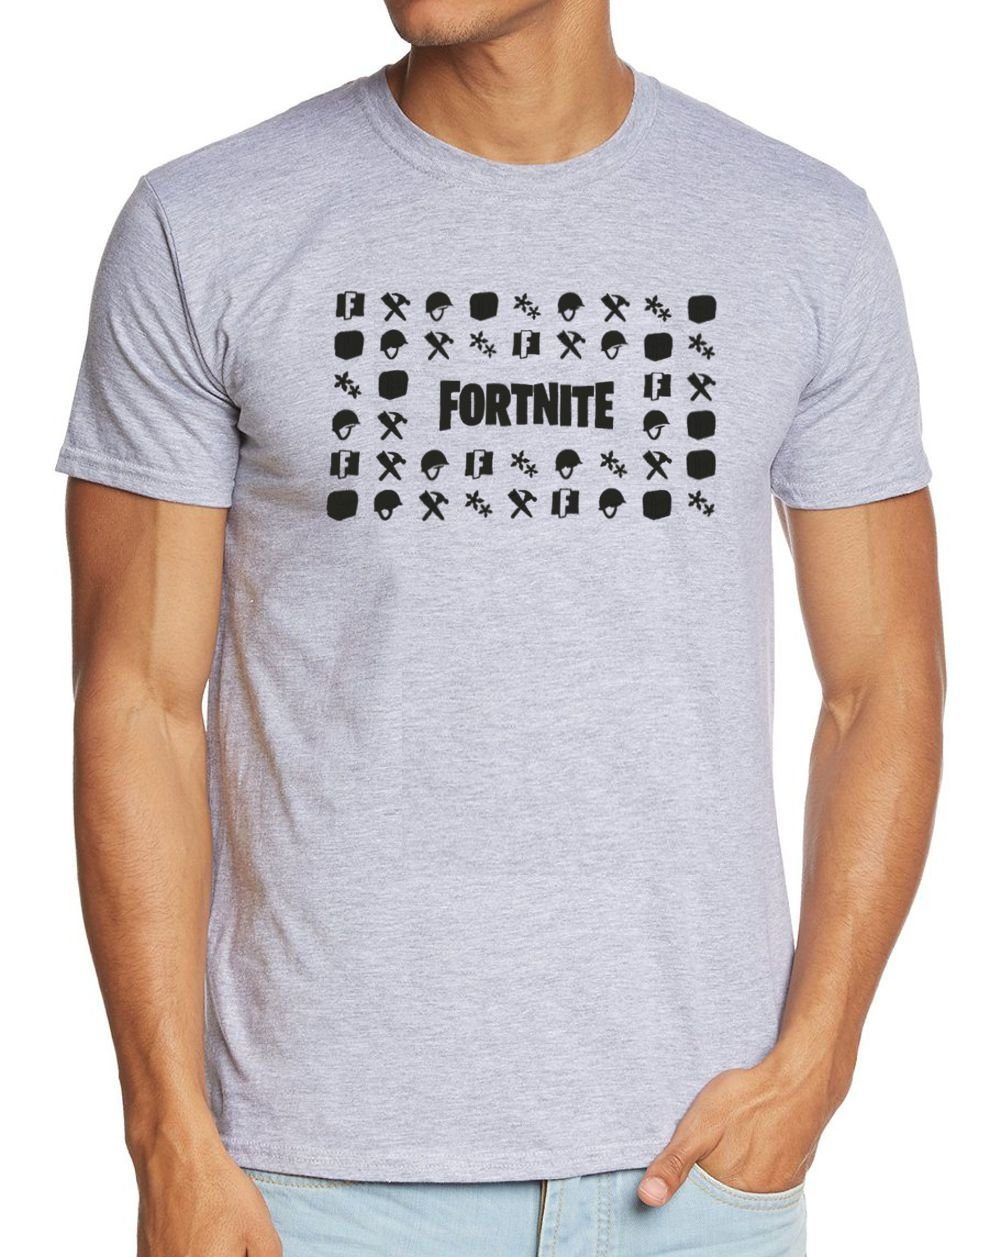 Fortnite Print-Shirt Fortnite T-Shirt hellgrau meliert Erwachsene + Jugendliche Epic Icons Gr. XS S M - Größe 140 152 164 176 182